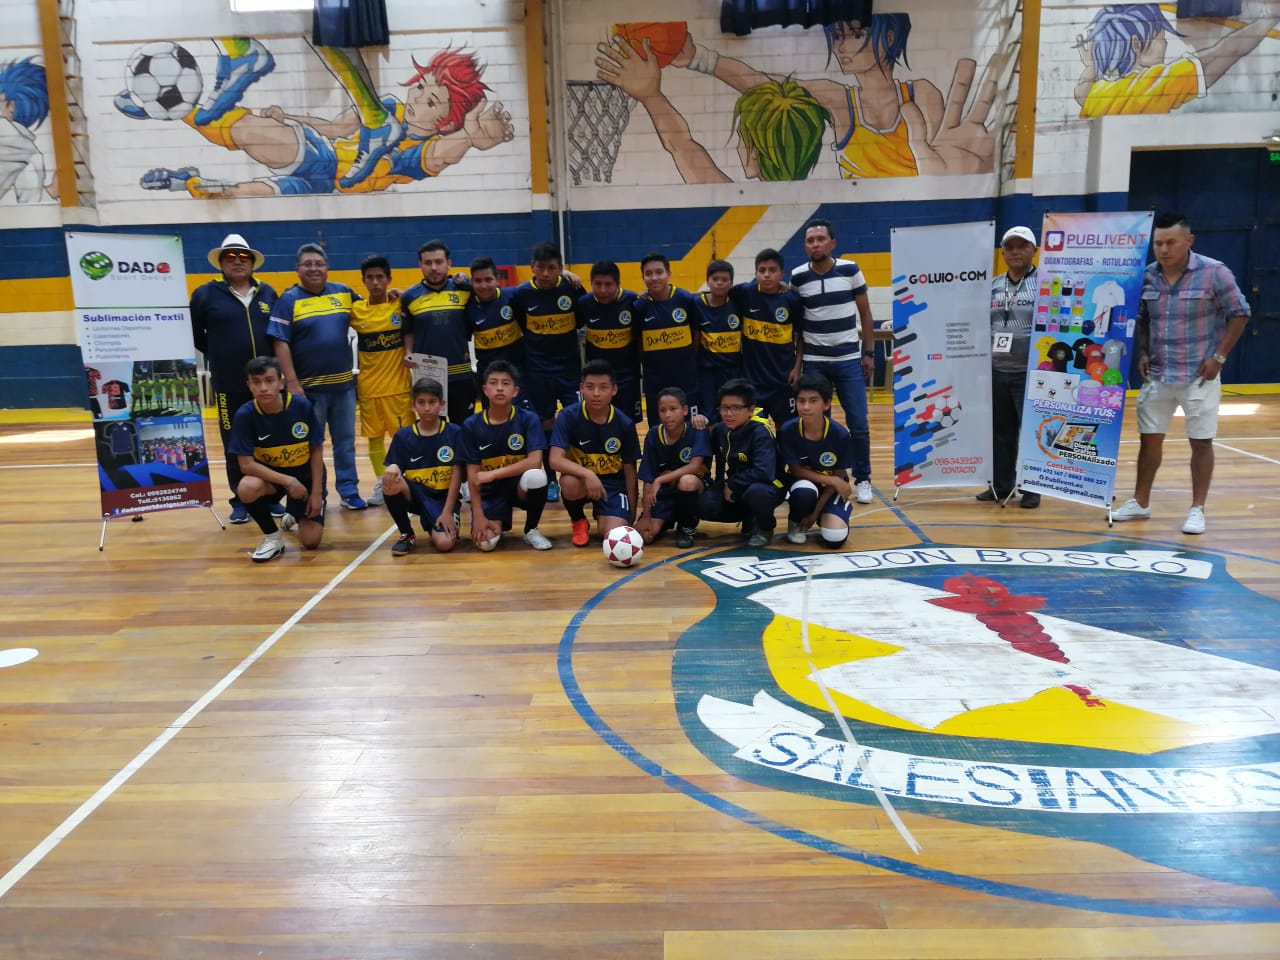 Auspiciosa Inauguracion De La Copa Futsal Don Bosco La Tola Gol Uio